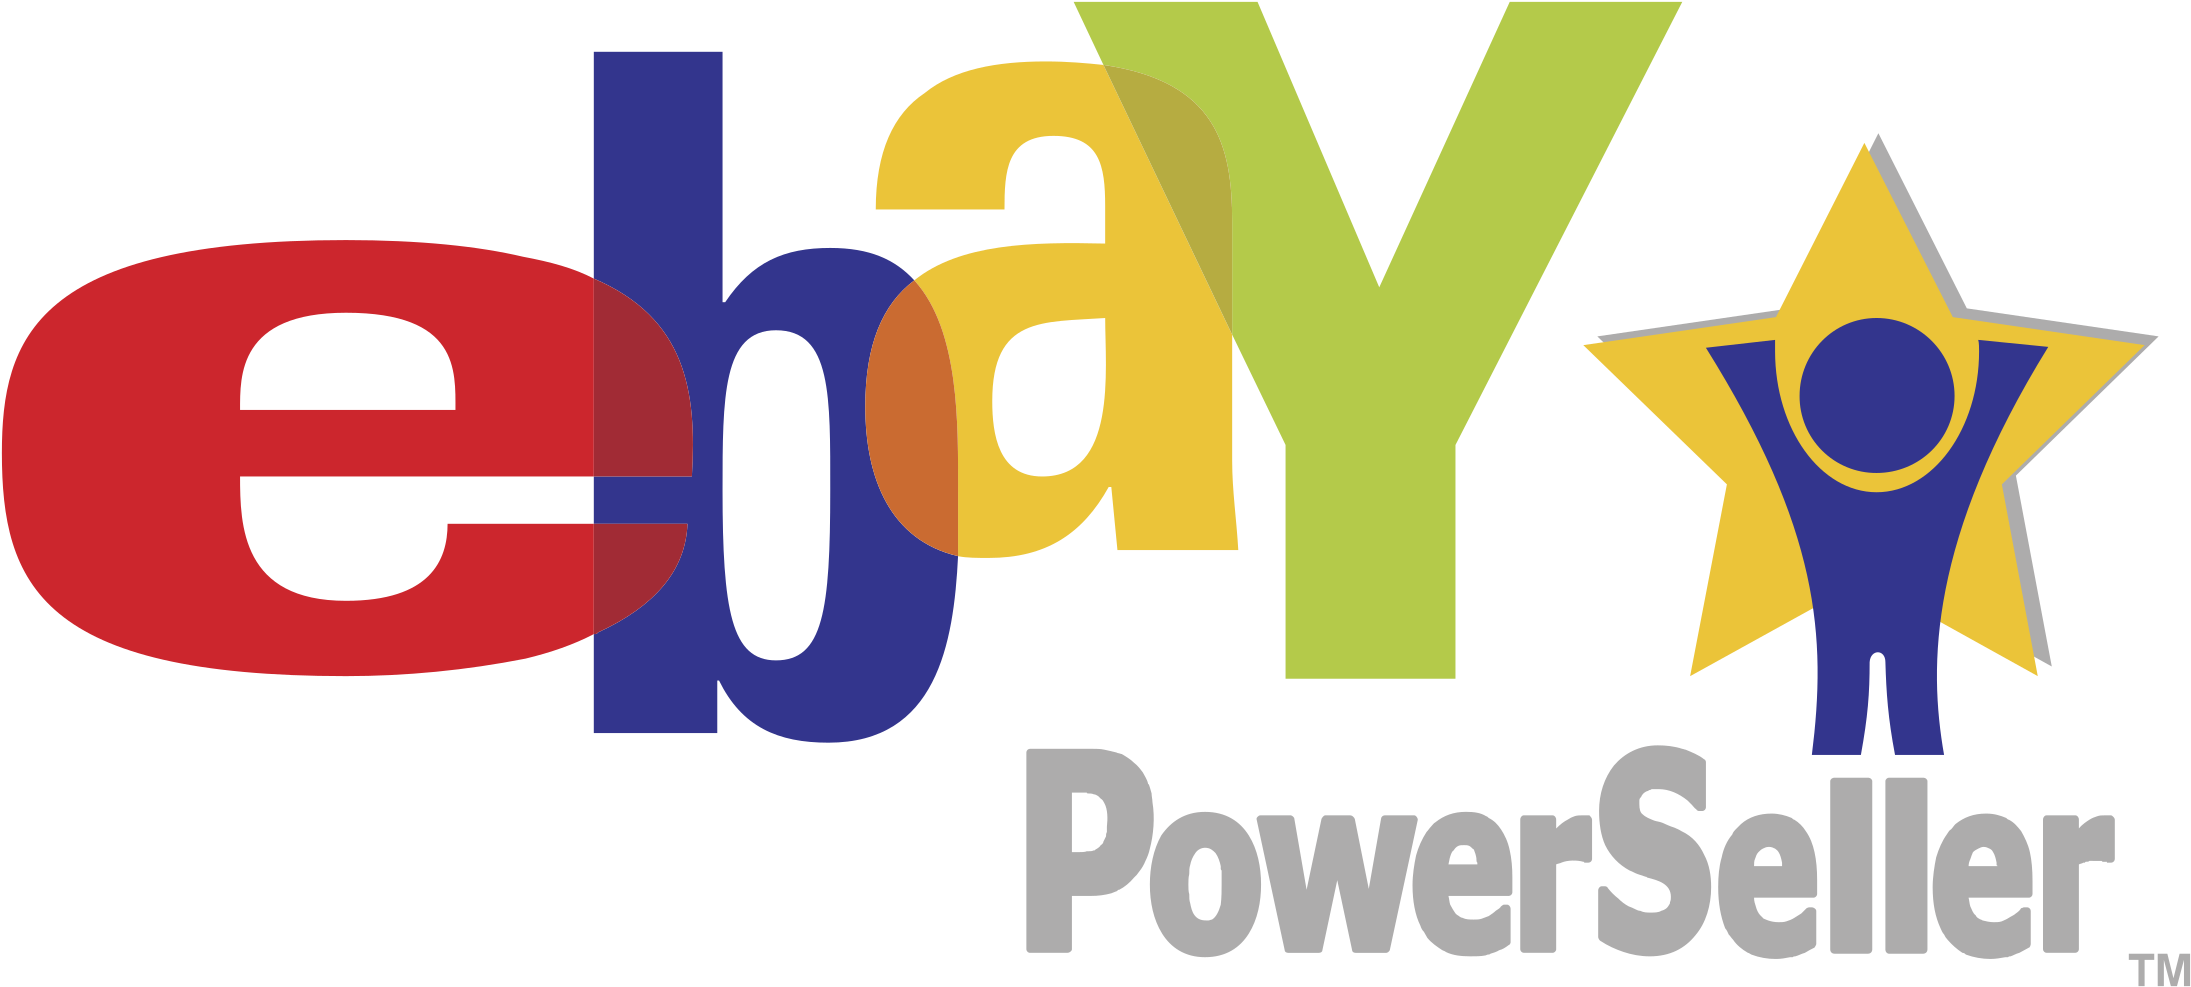 Foto PNG logo eBay